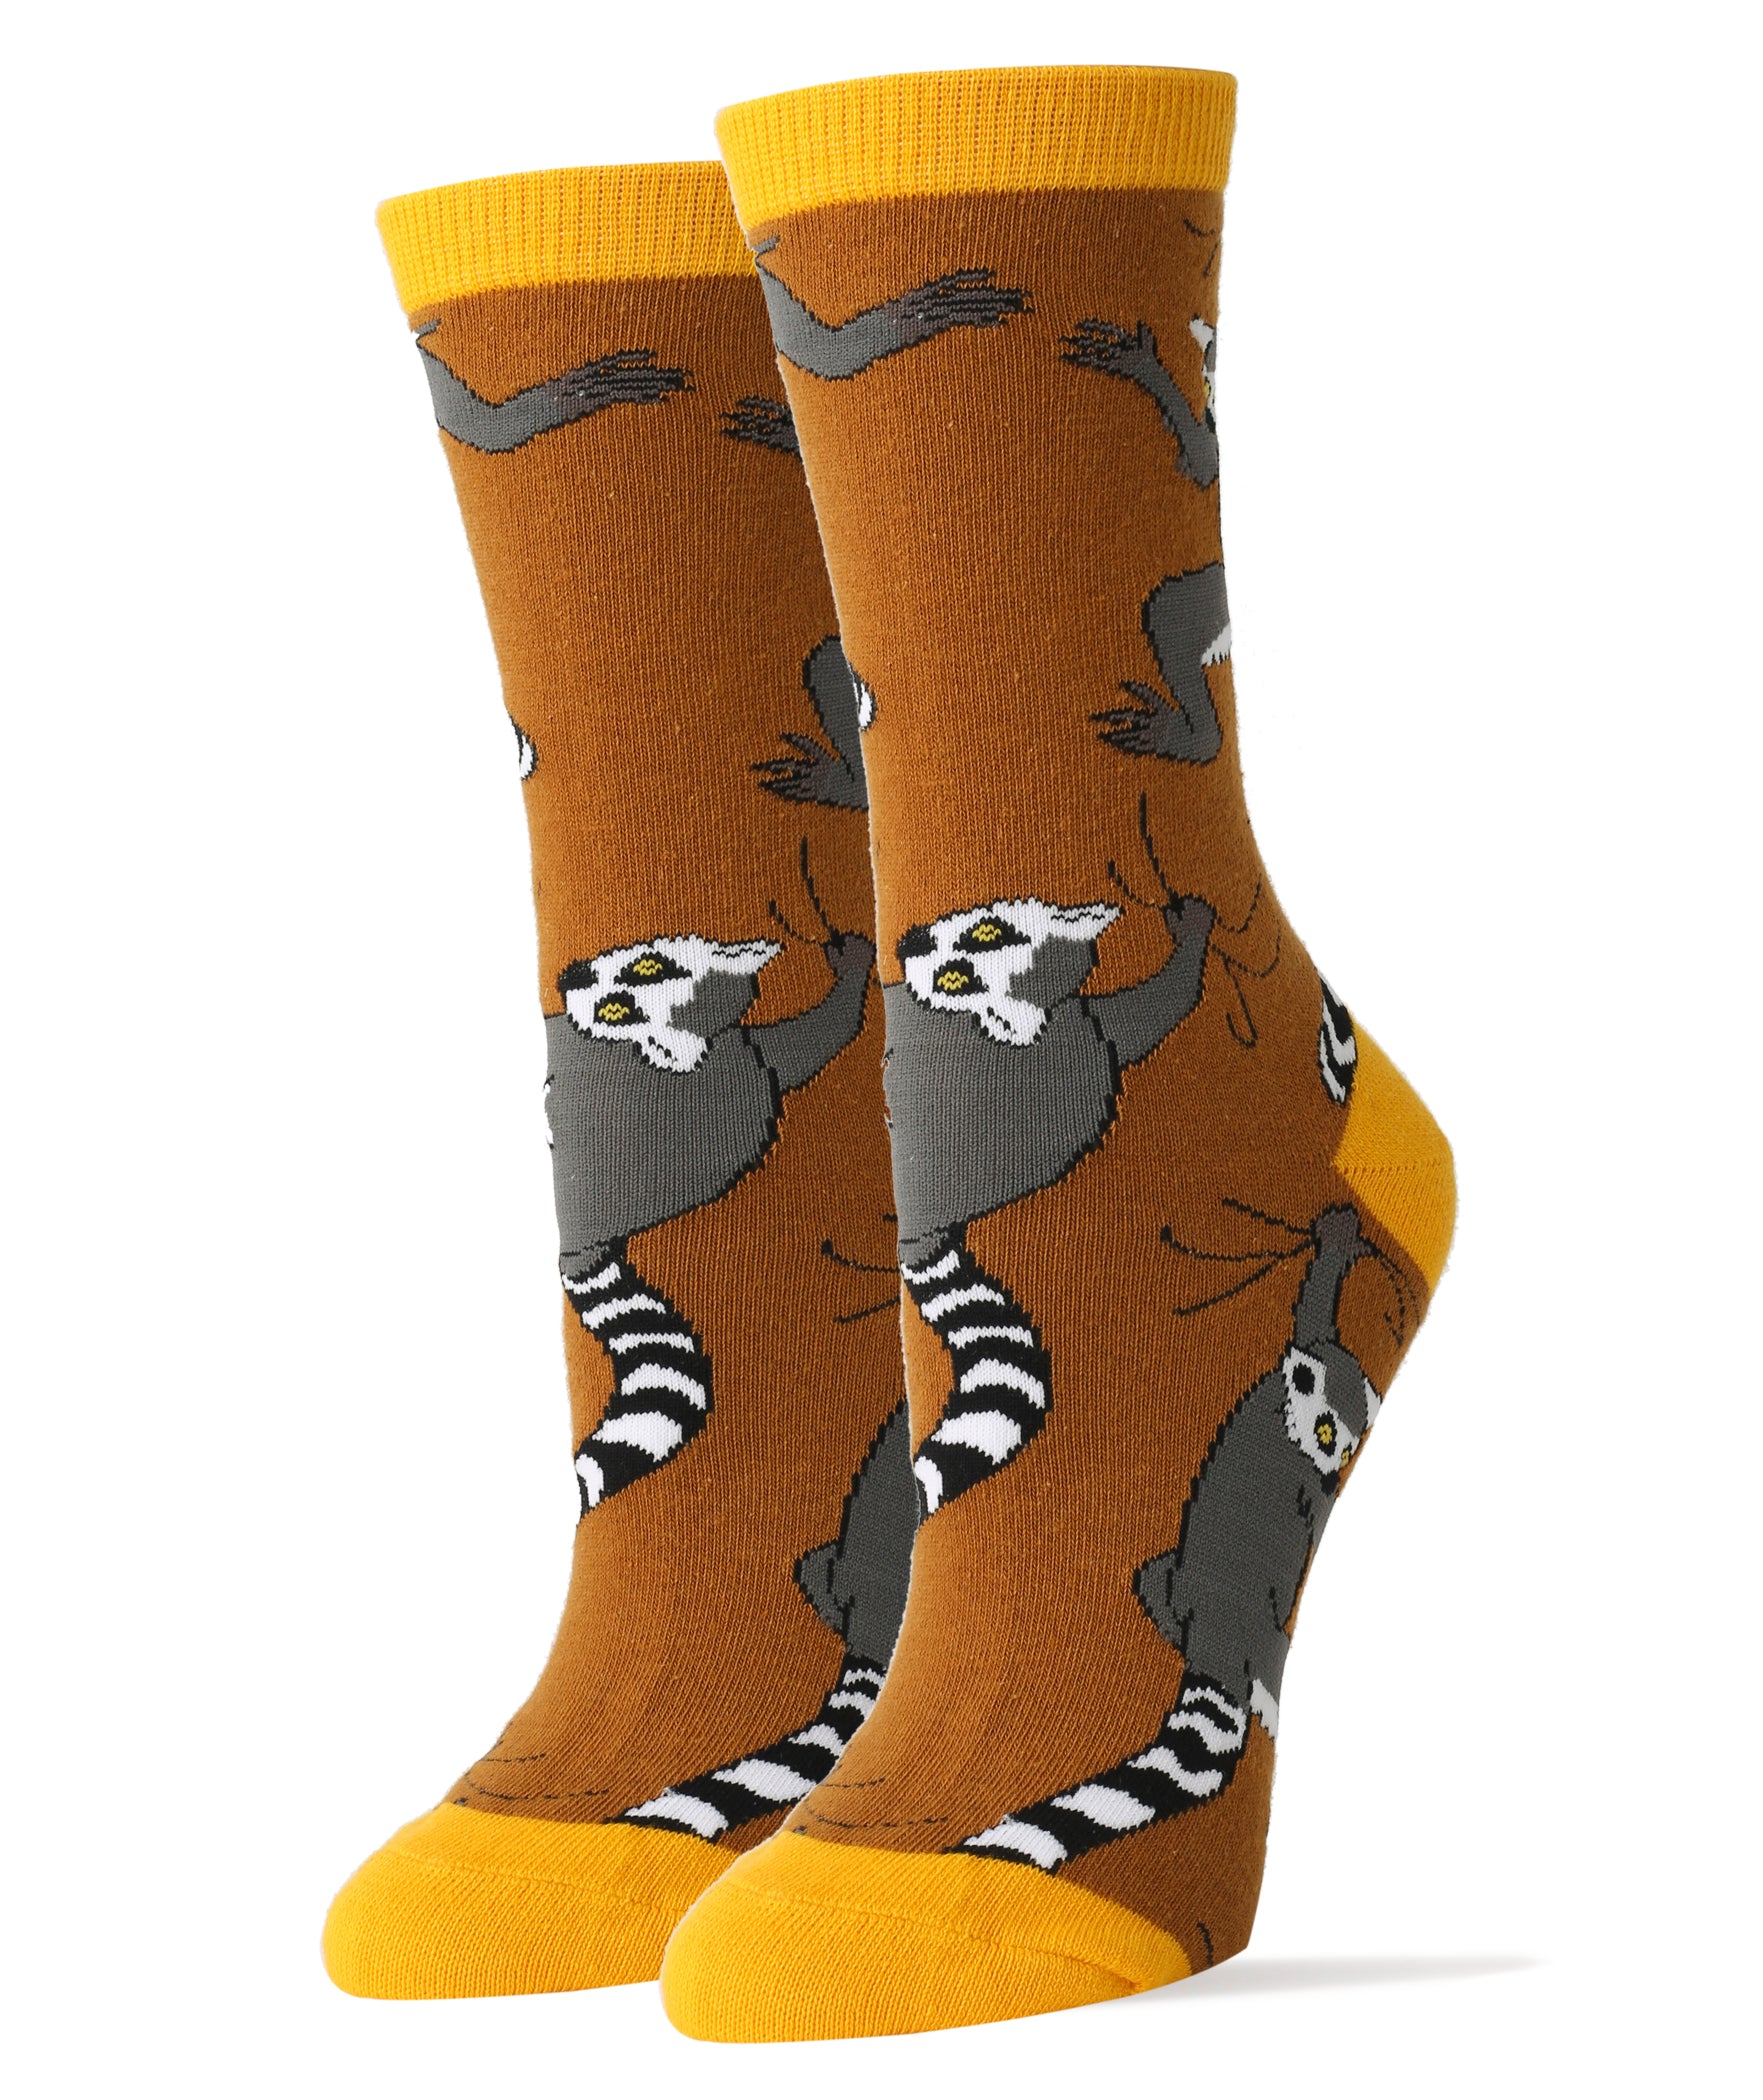 Lemur Buds - Women's - Oooh Yeah Socks